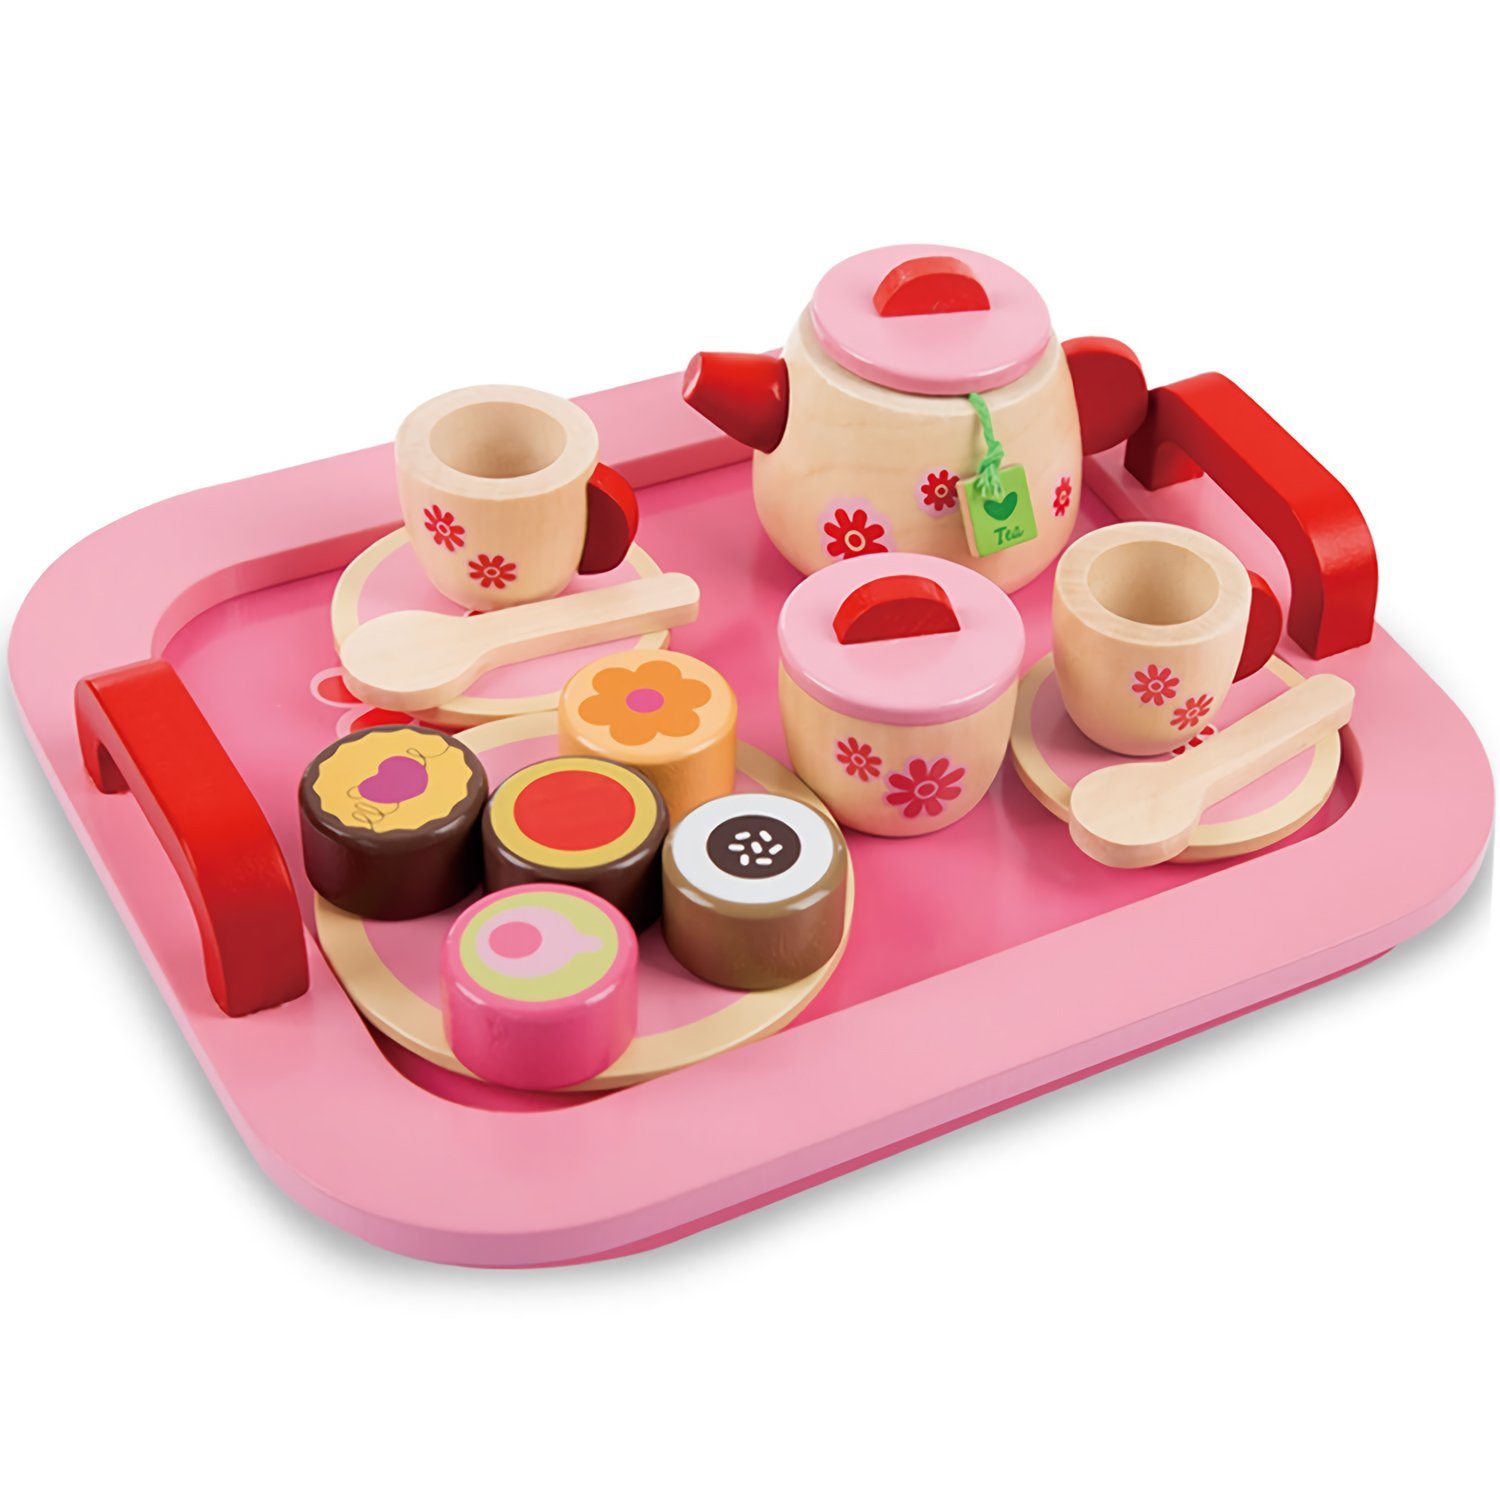 Kinder Teeservice Set Holz Teeset Rollenspiel Spielzeug Kinderküche Tea Party 